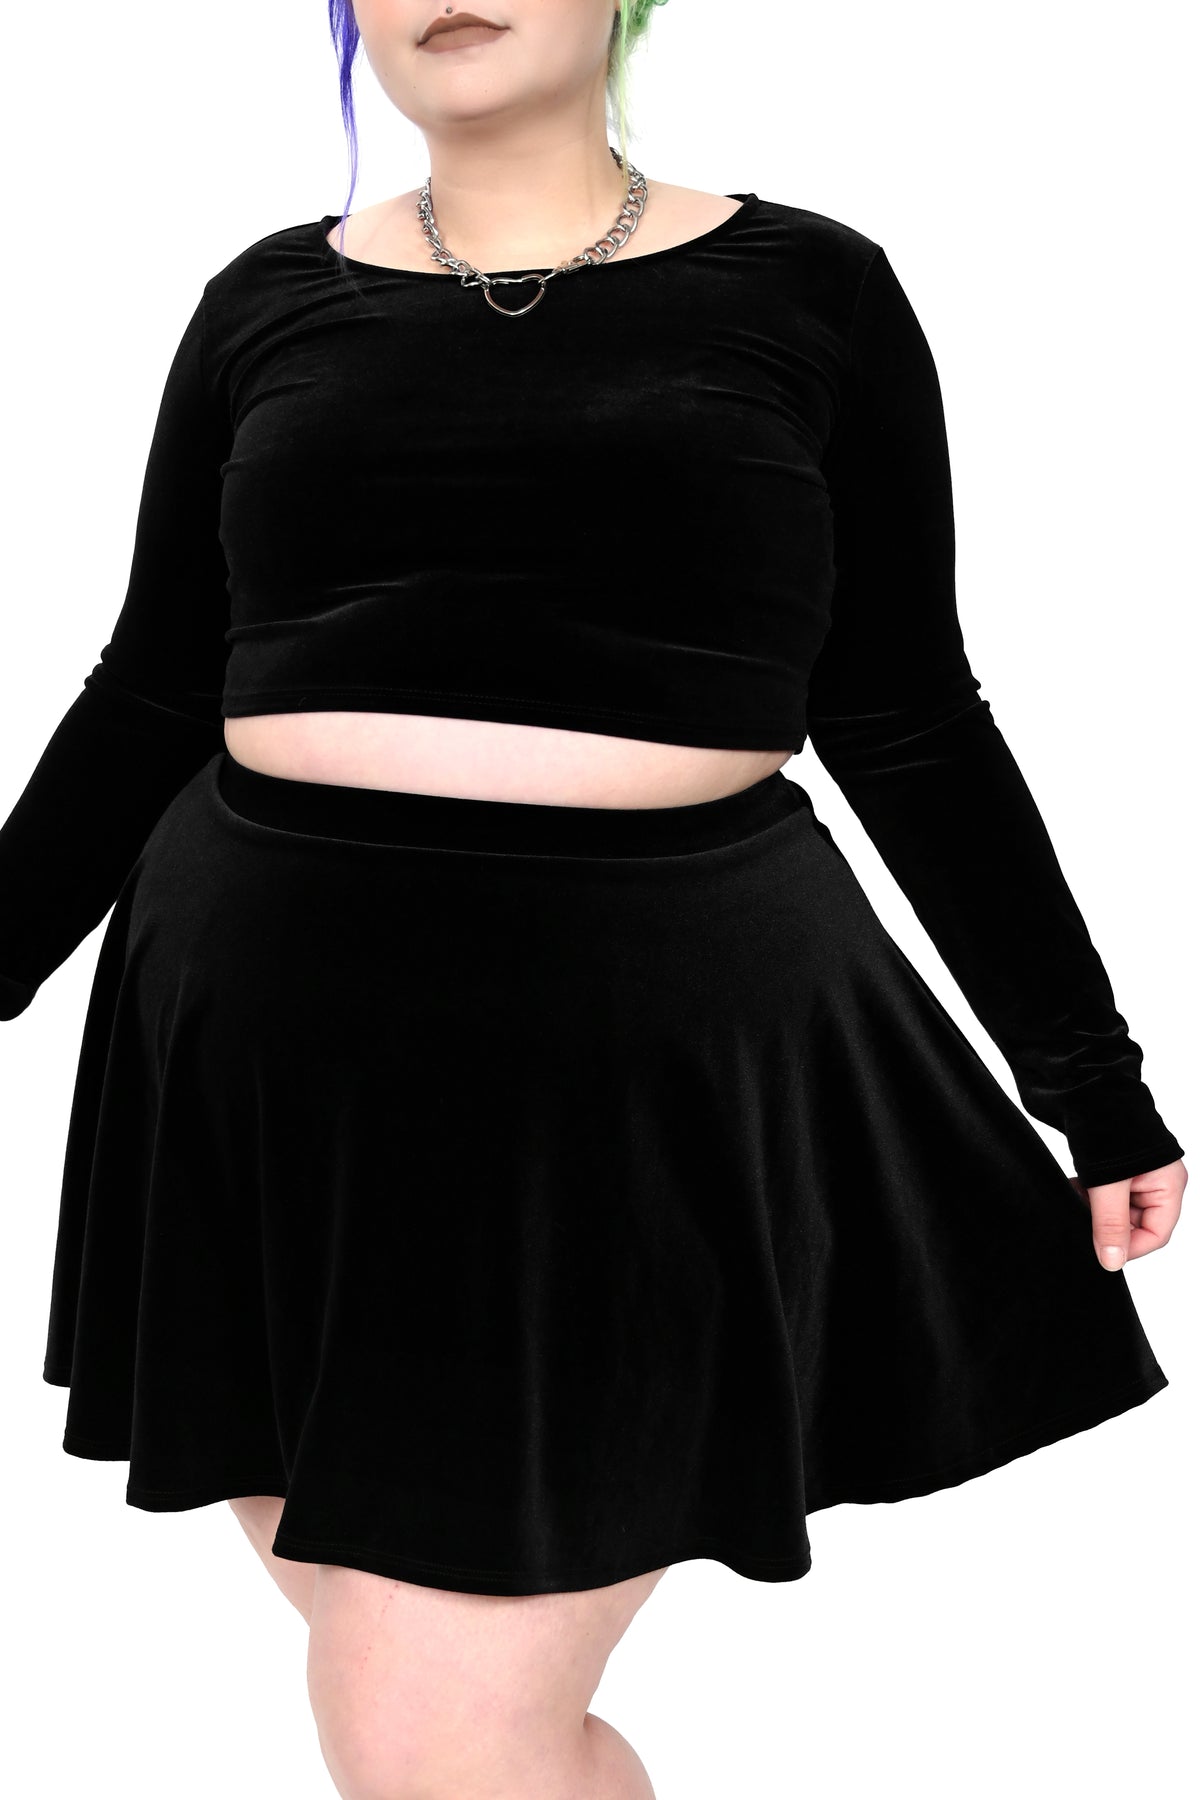 4 way stretch black velvet skirt